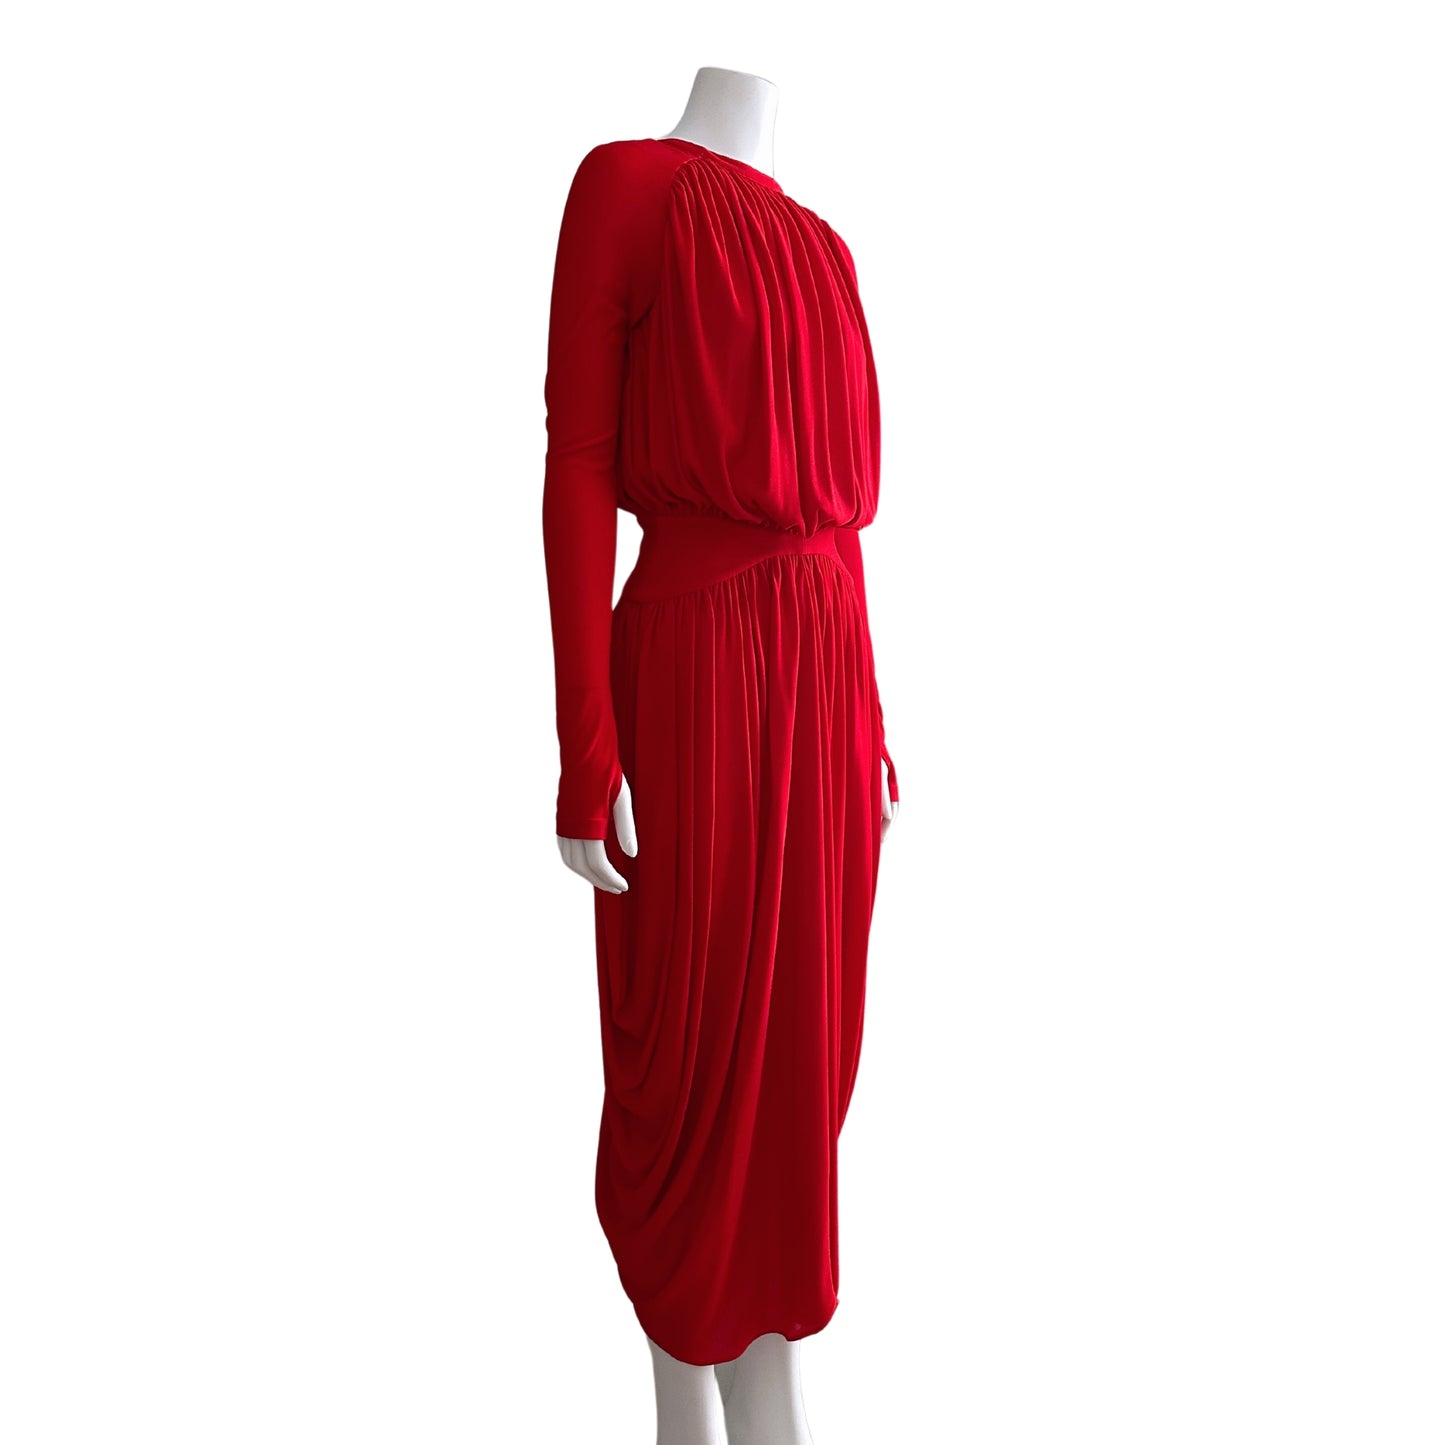 ANTONIO BERARDI Draped Red Midi-Dress